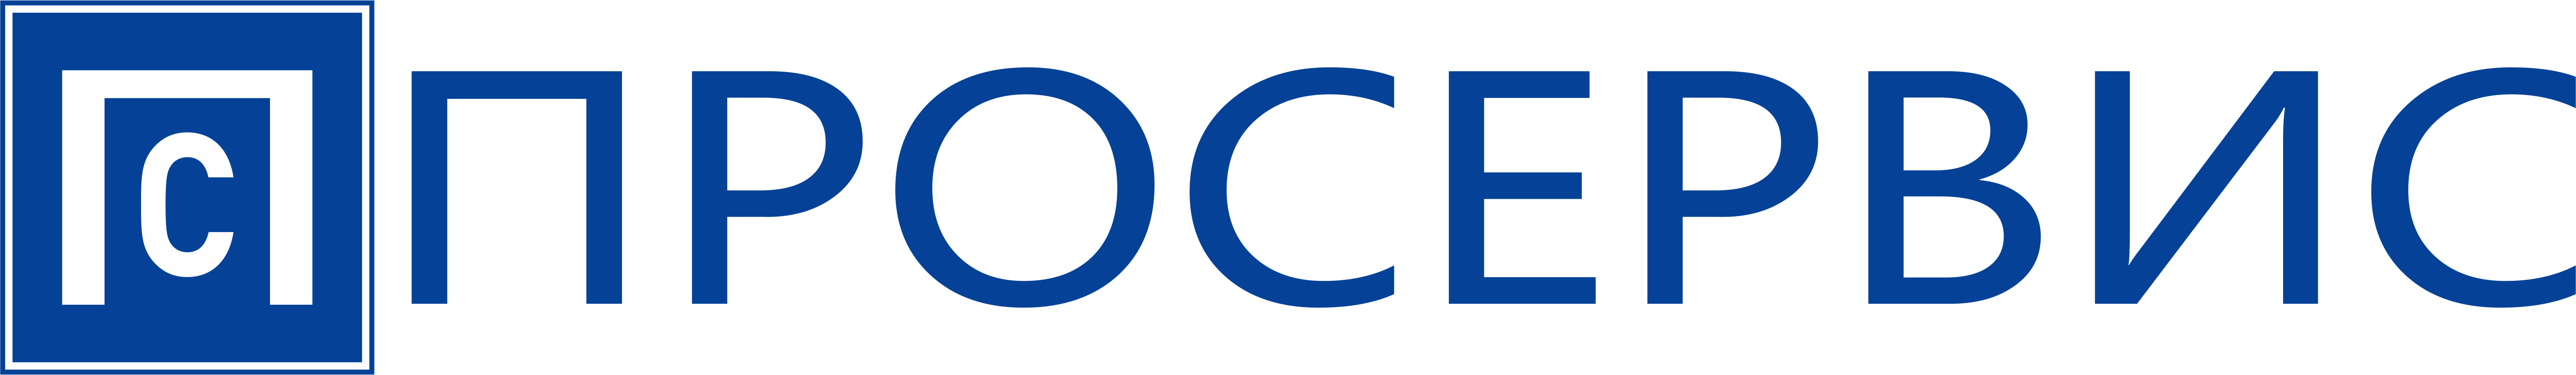 pro-service-logo